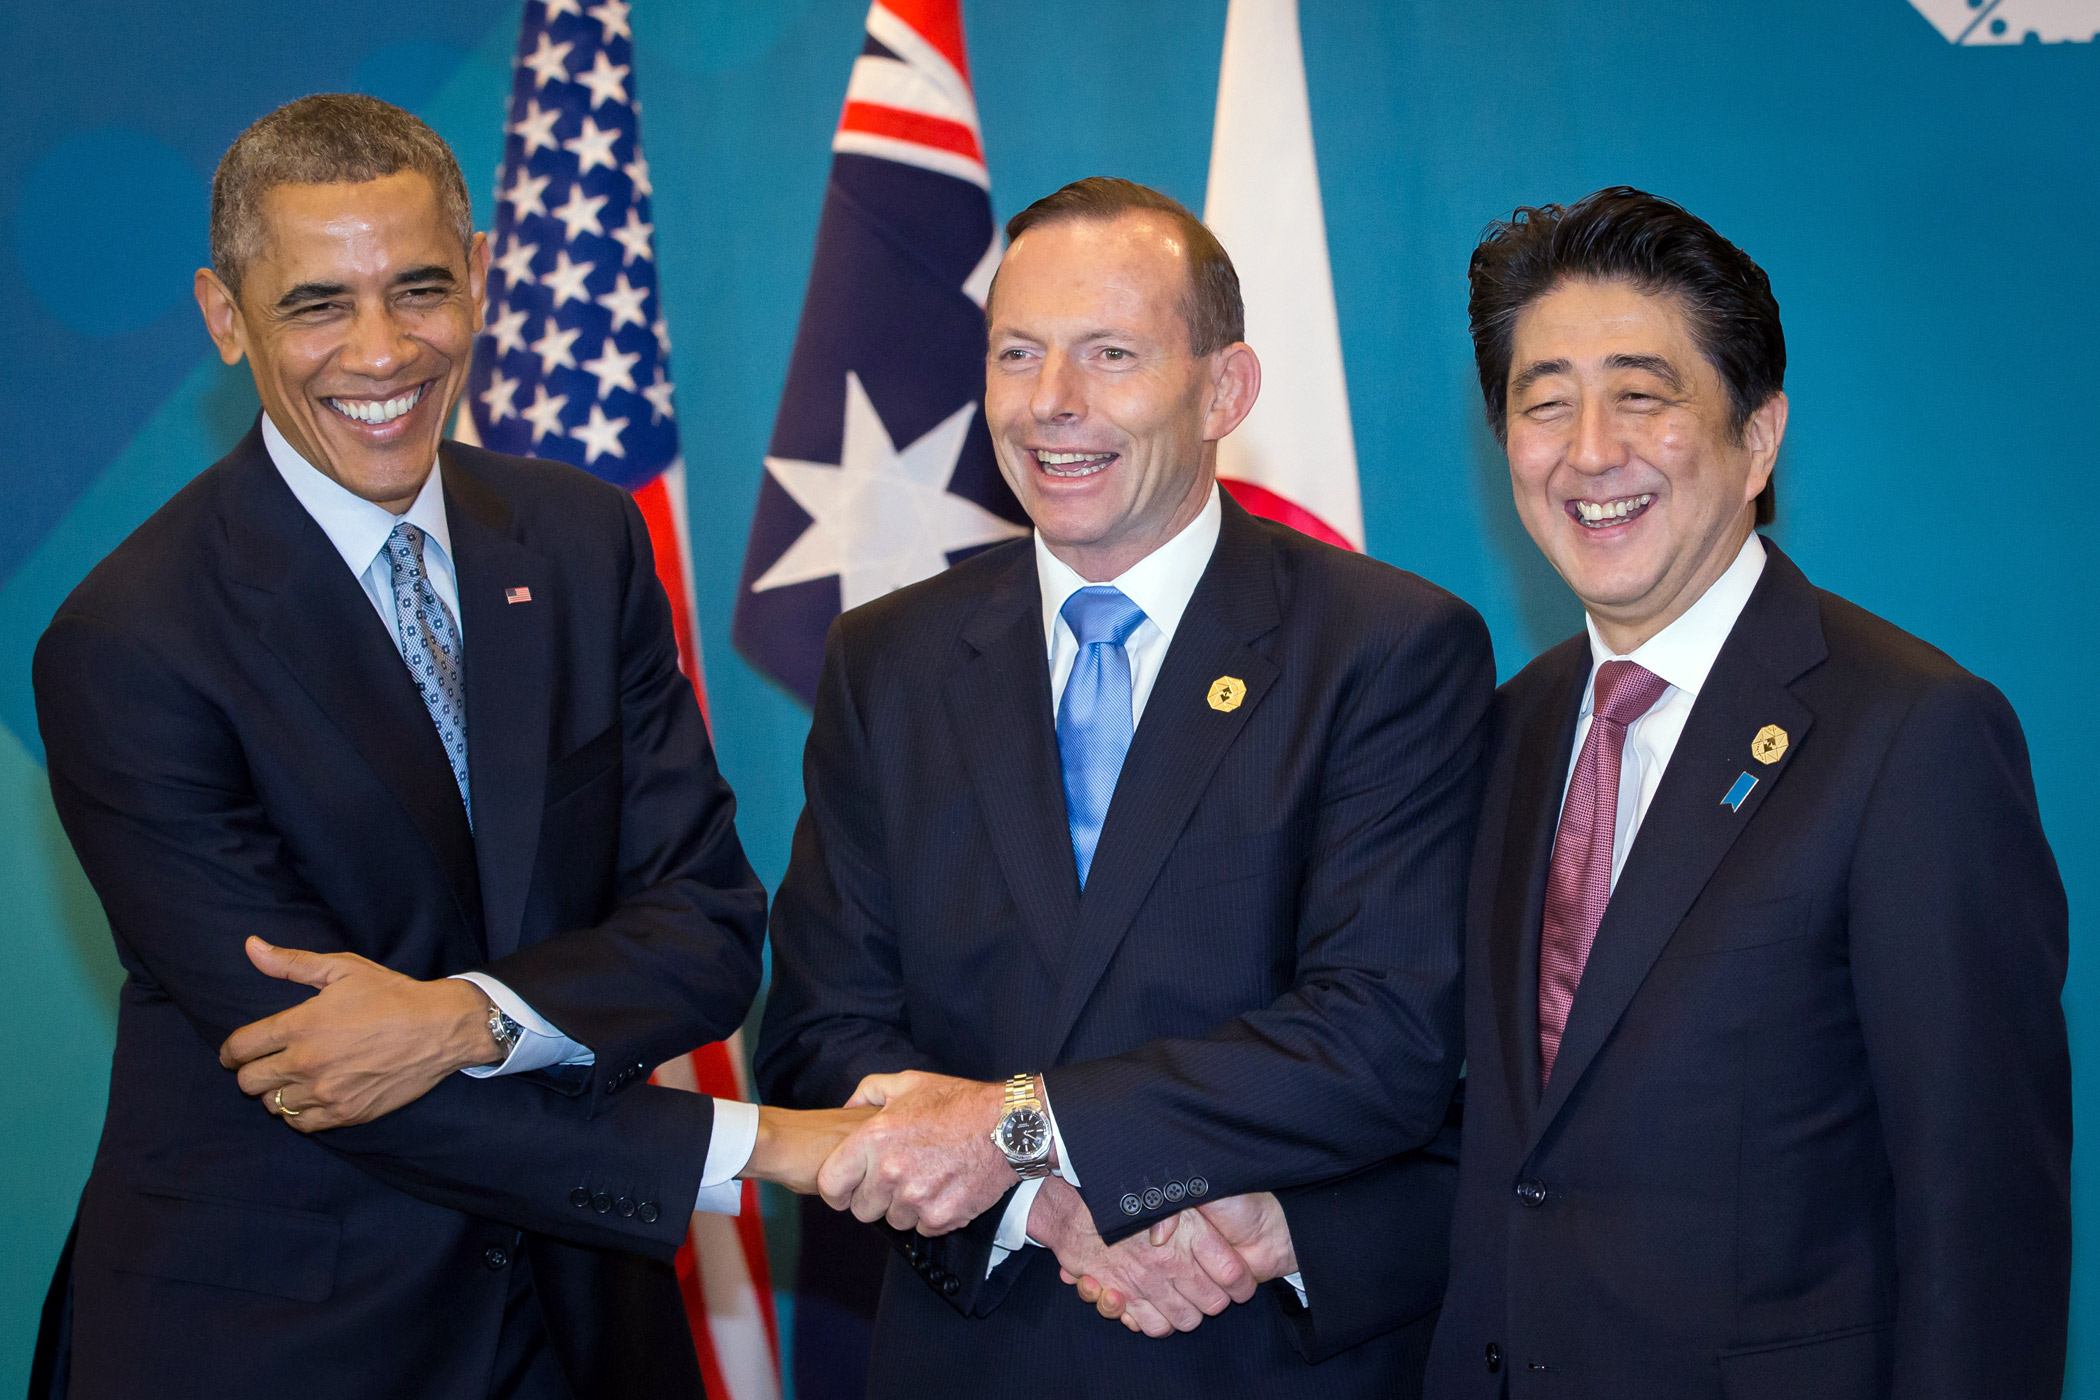 U.S. President Barack Obama, from left, Australian Prime Minister Tony Abbott and Japanese Prime Minister Shinzo Abe share a three-way handshake at the G-20 Summit in Brisbane, Australia on Nov. 16, 2014.